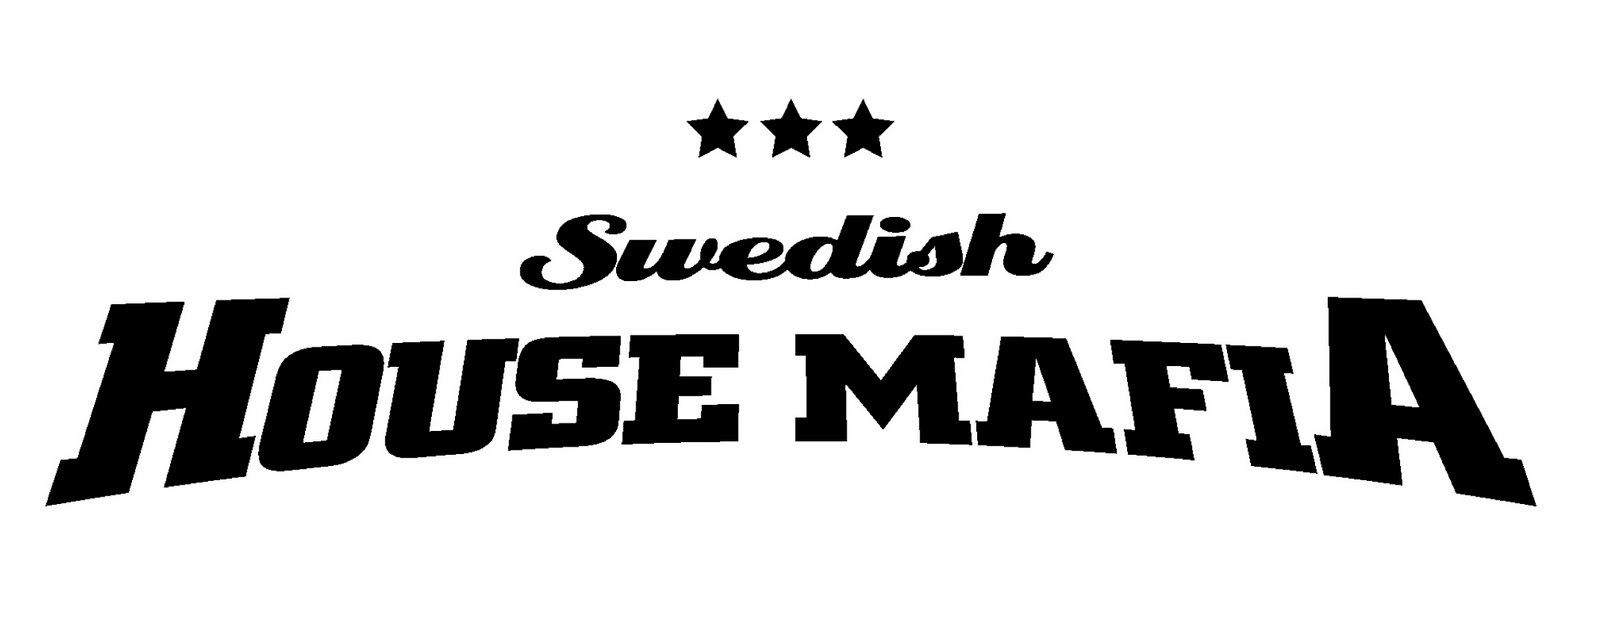 10 Most Popular Swedish House Mafia Logos FULL HD 1920× ...